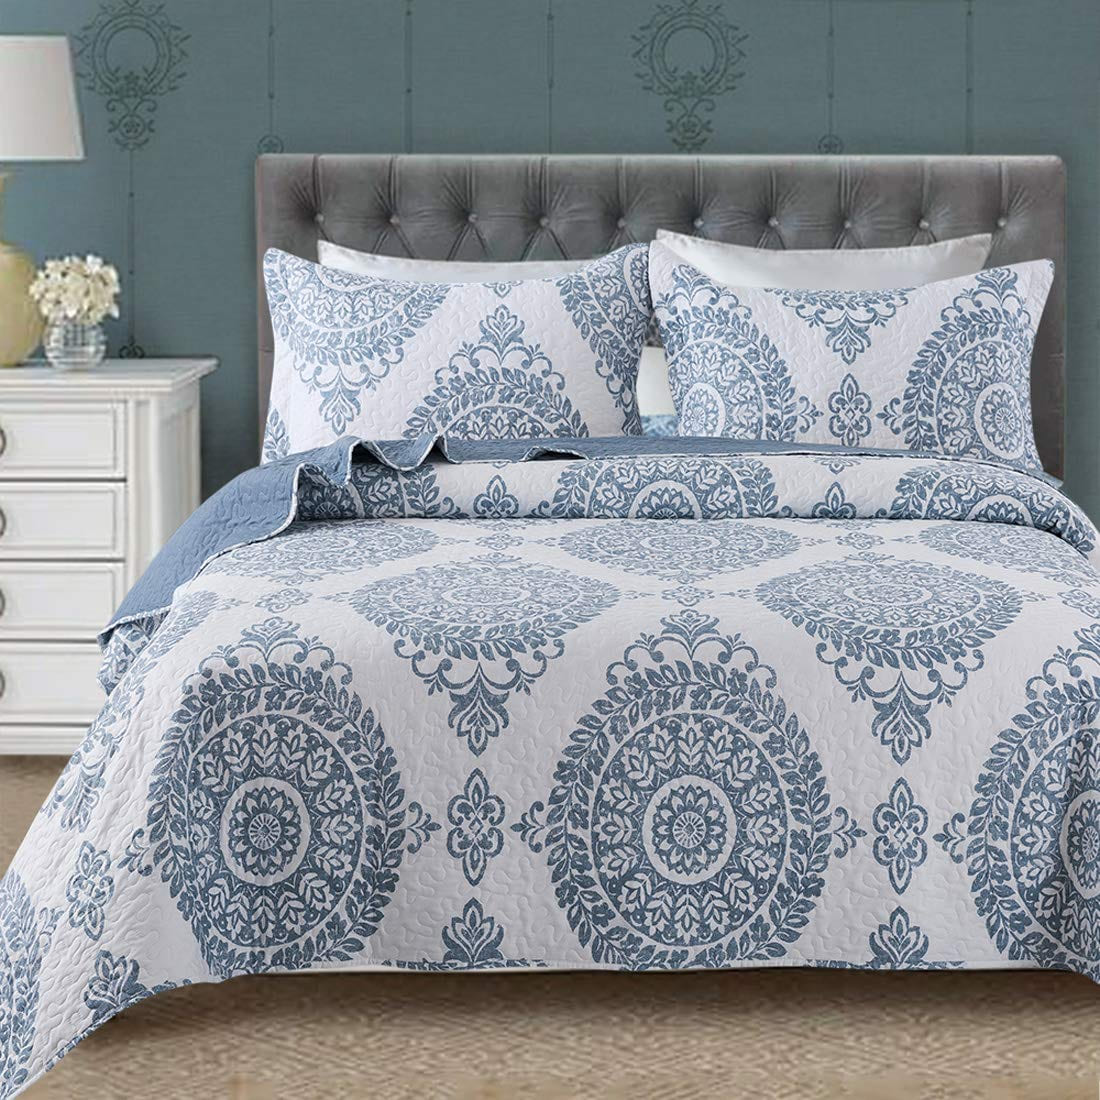 Microfiber Quilt Set Quilted Bedspread Lightweight Coverlet Set Blue Floral Printed Oversized Quilted Bedding Set with Shams